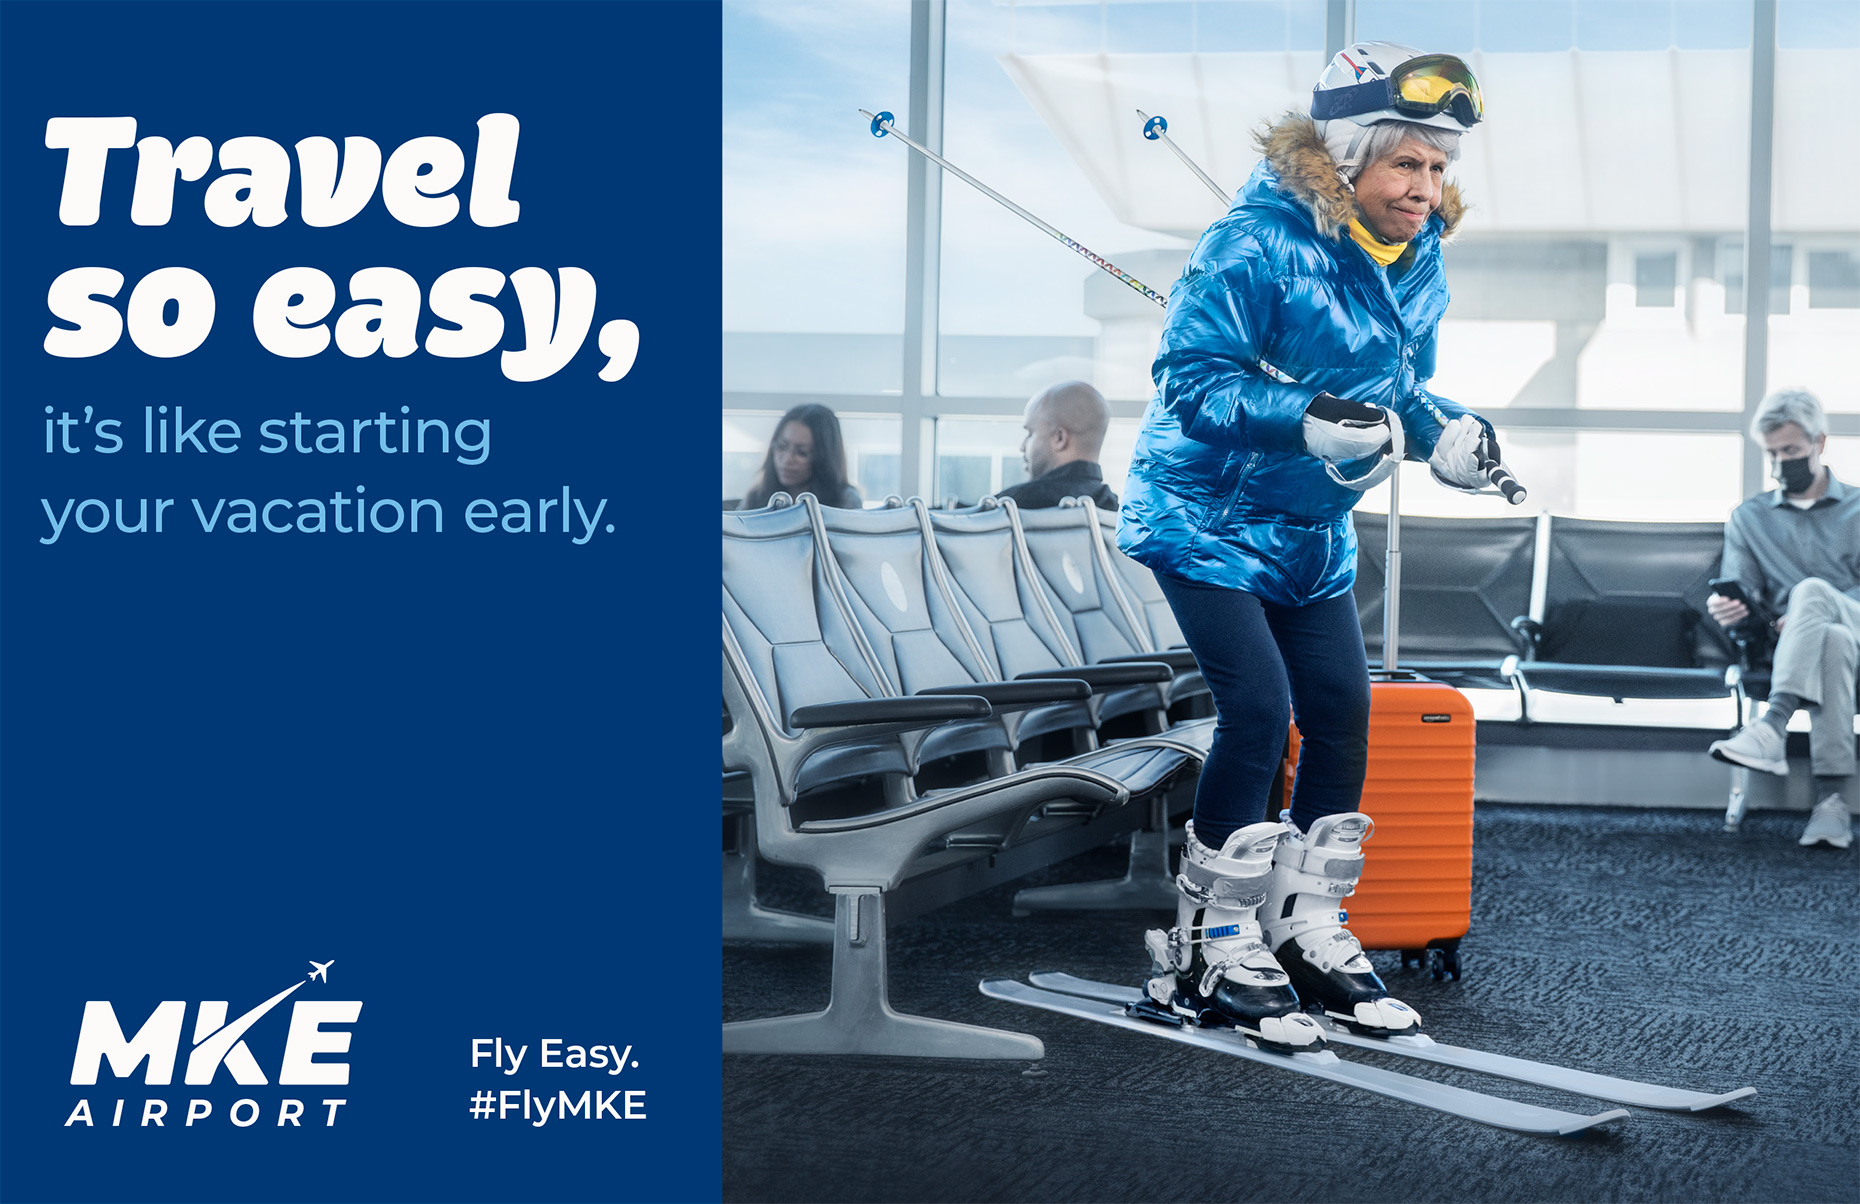 Airport Ad Campaign Grandma skier